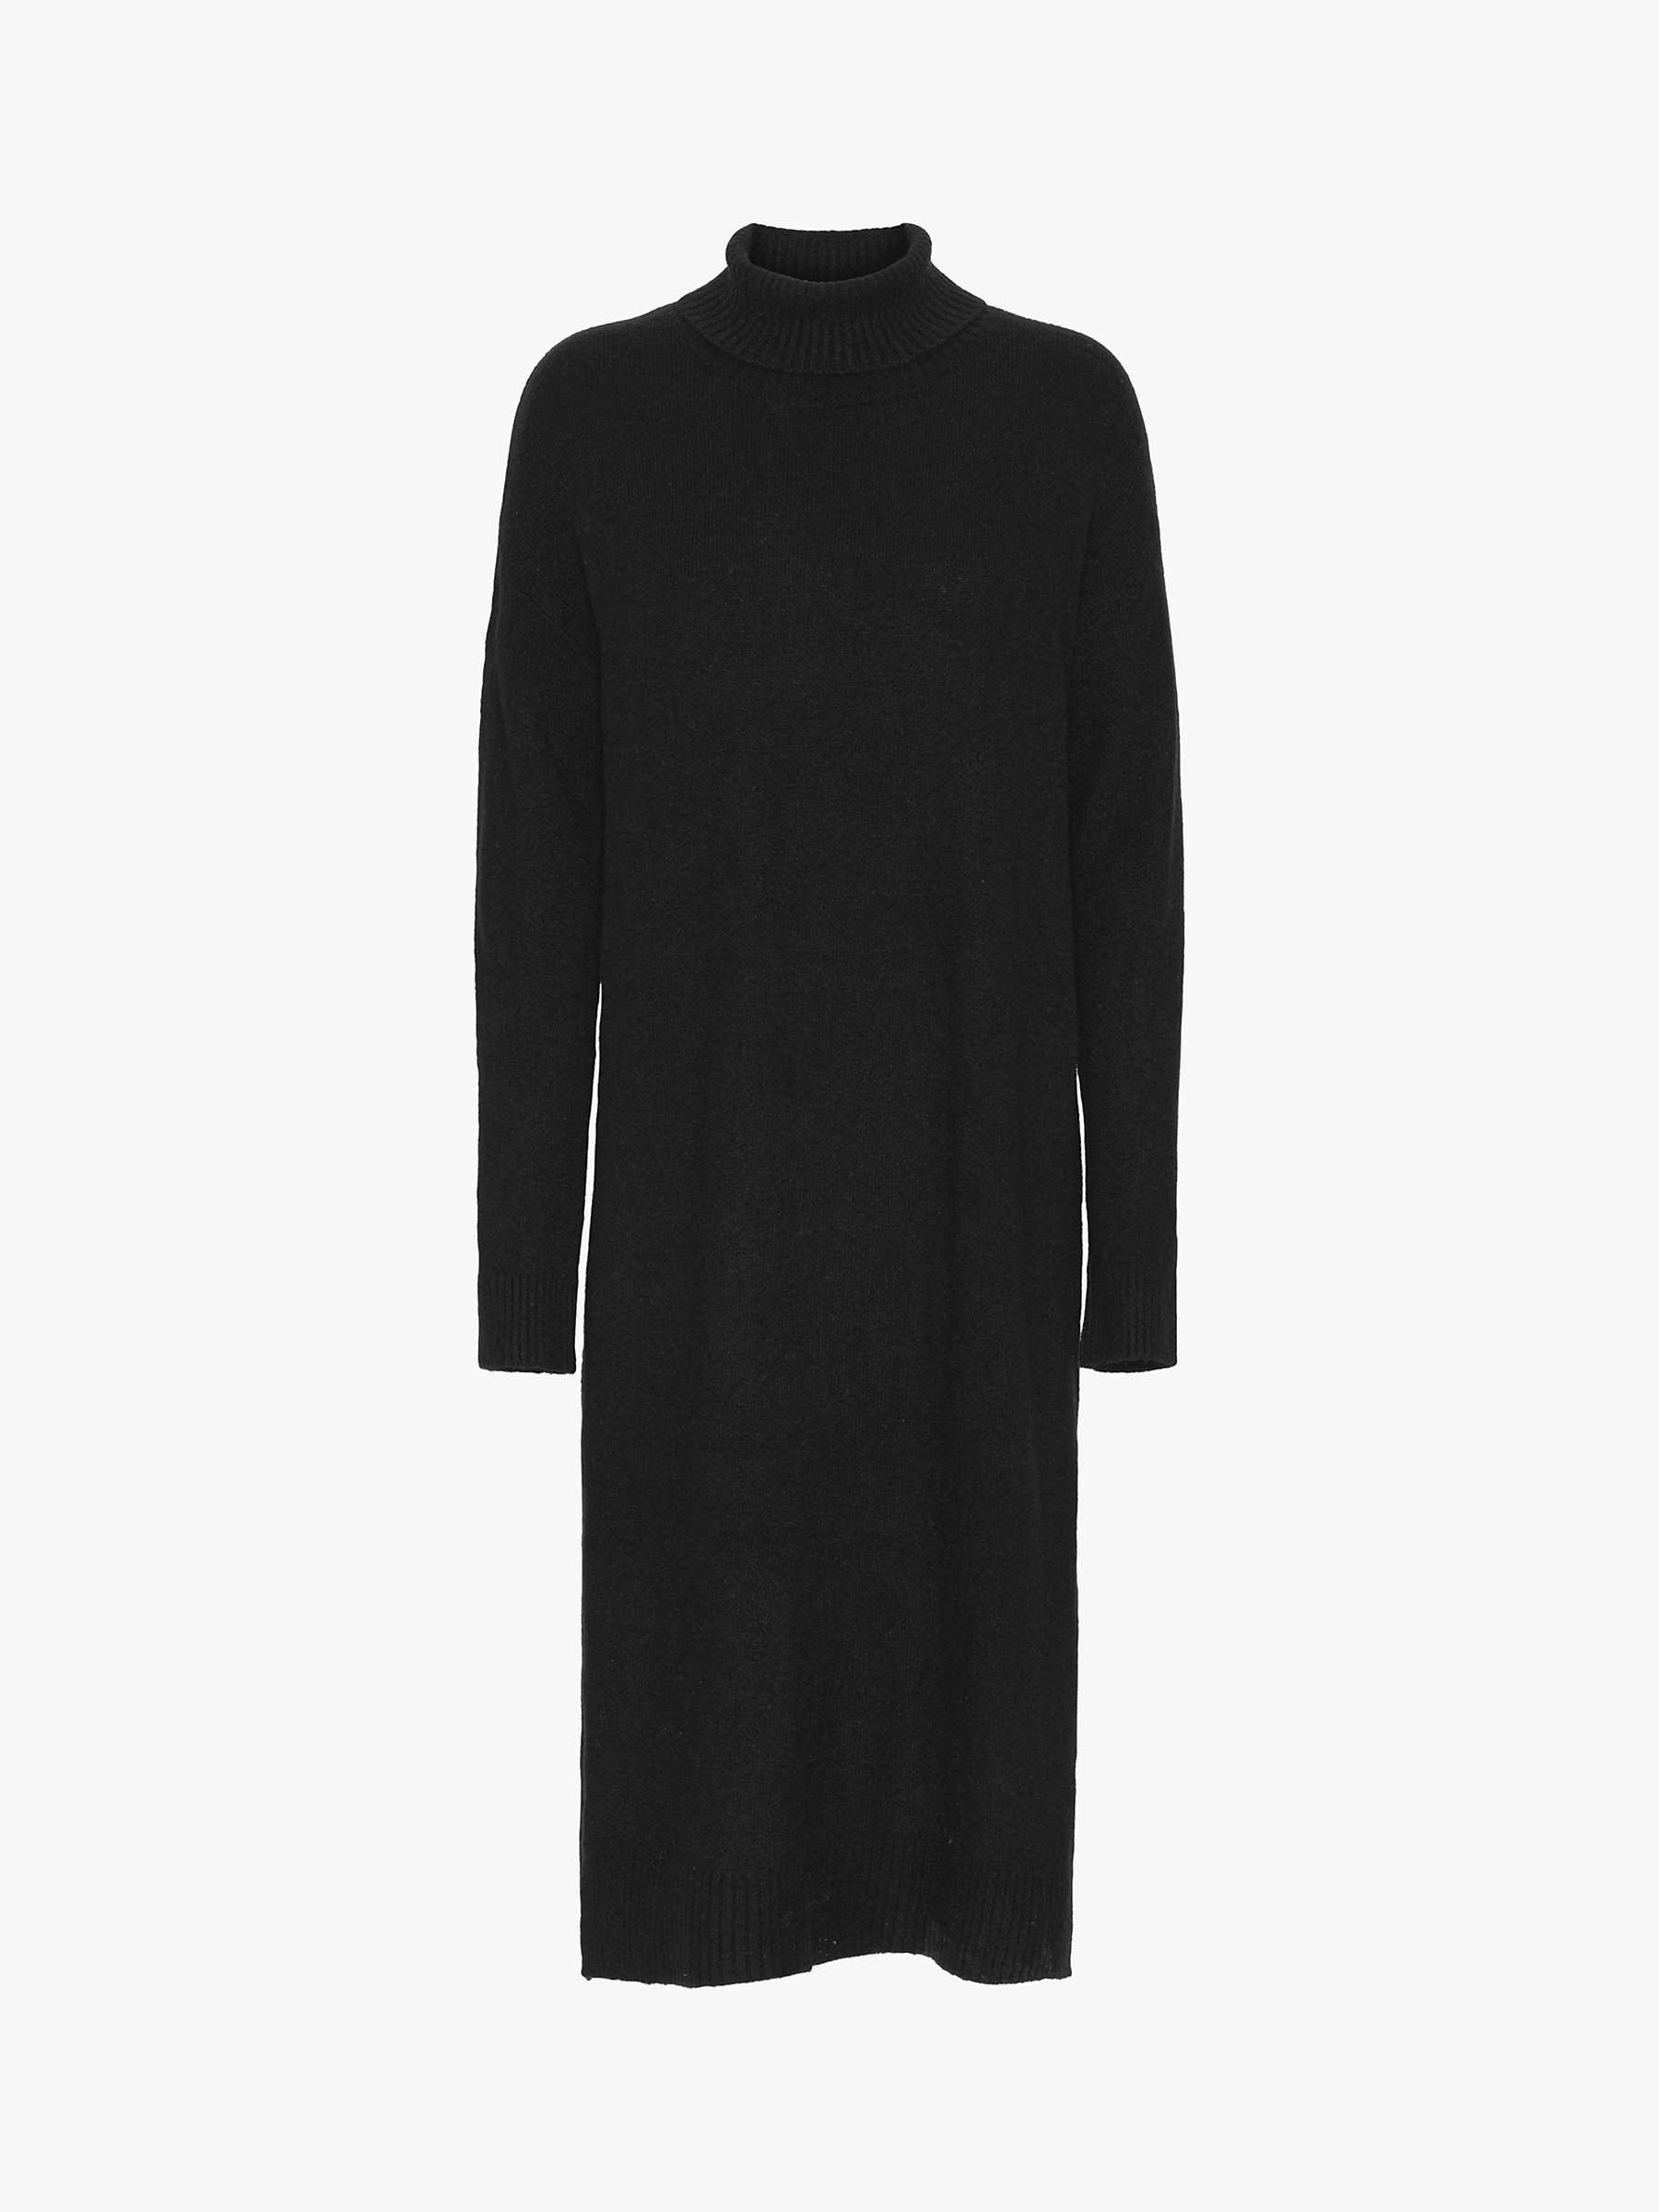 A-VIEW Penny Knit Wool Blend Jumper Dress, Black at John Lewis & Partners